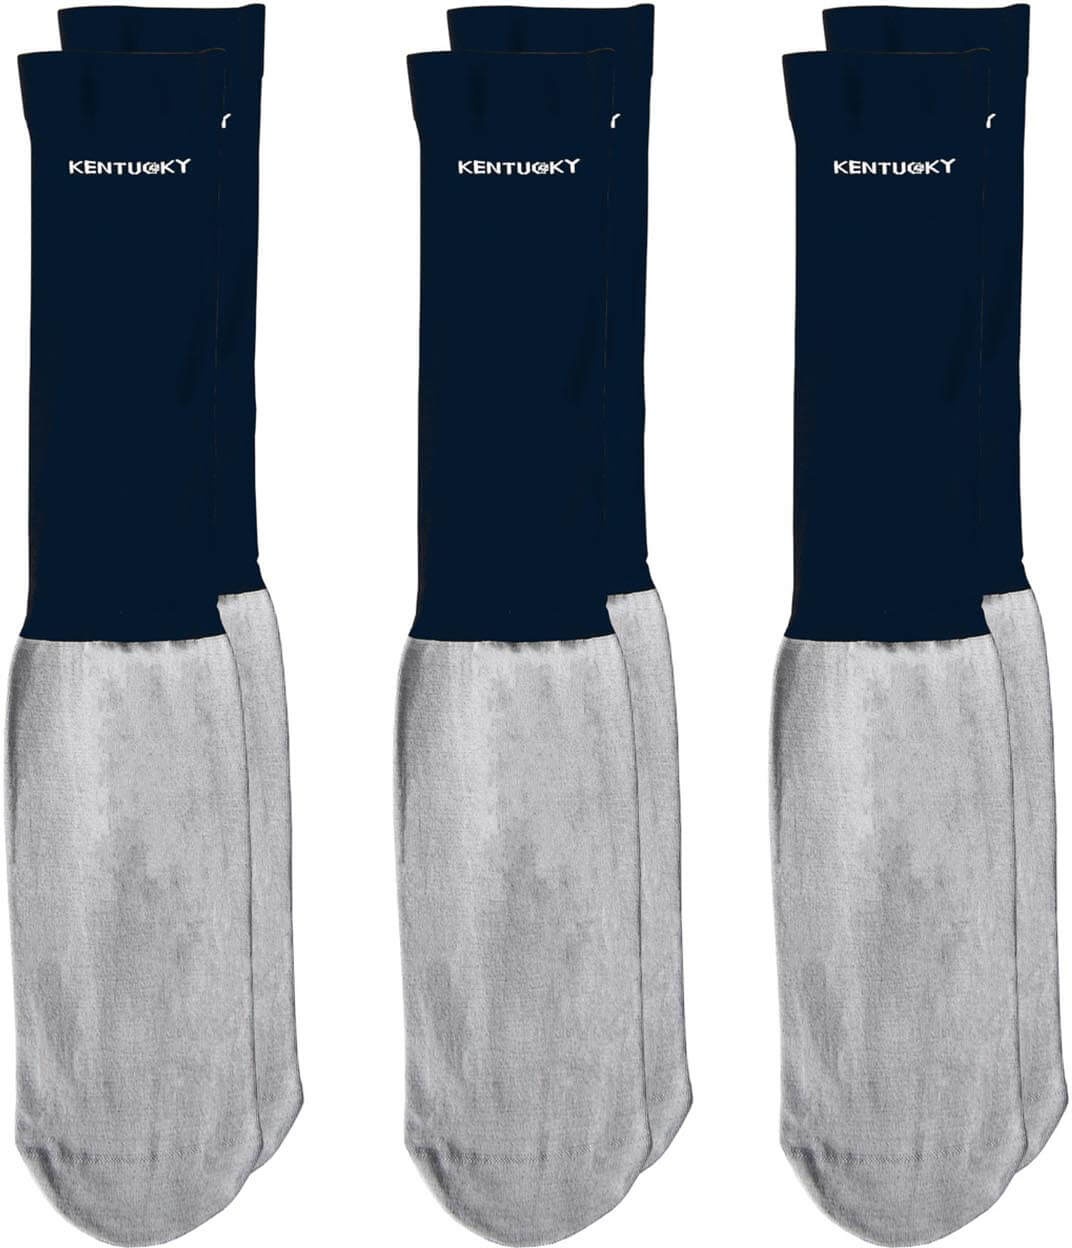 Kentucky Horsewear Socken Basic Set of 3 Reitsocken Navy 41-46